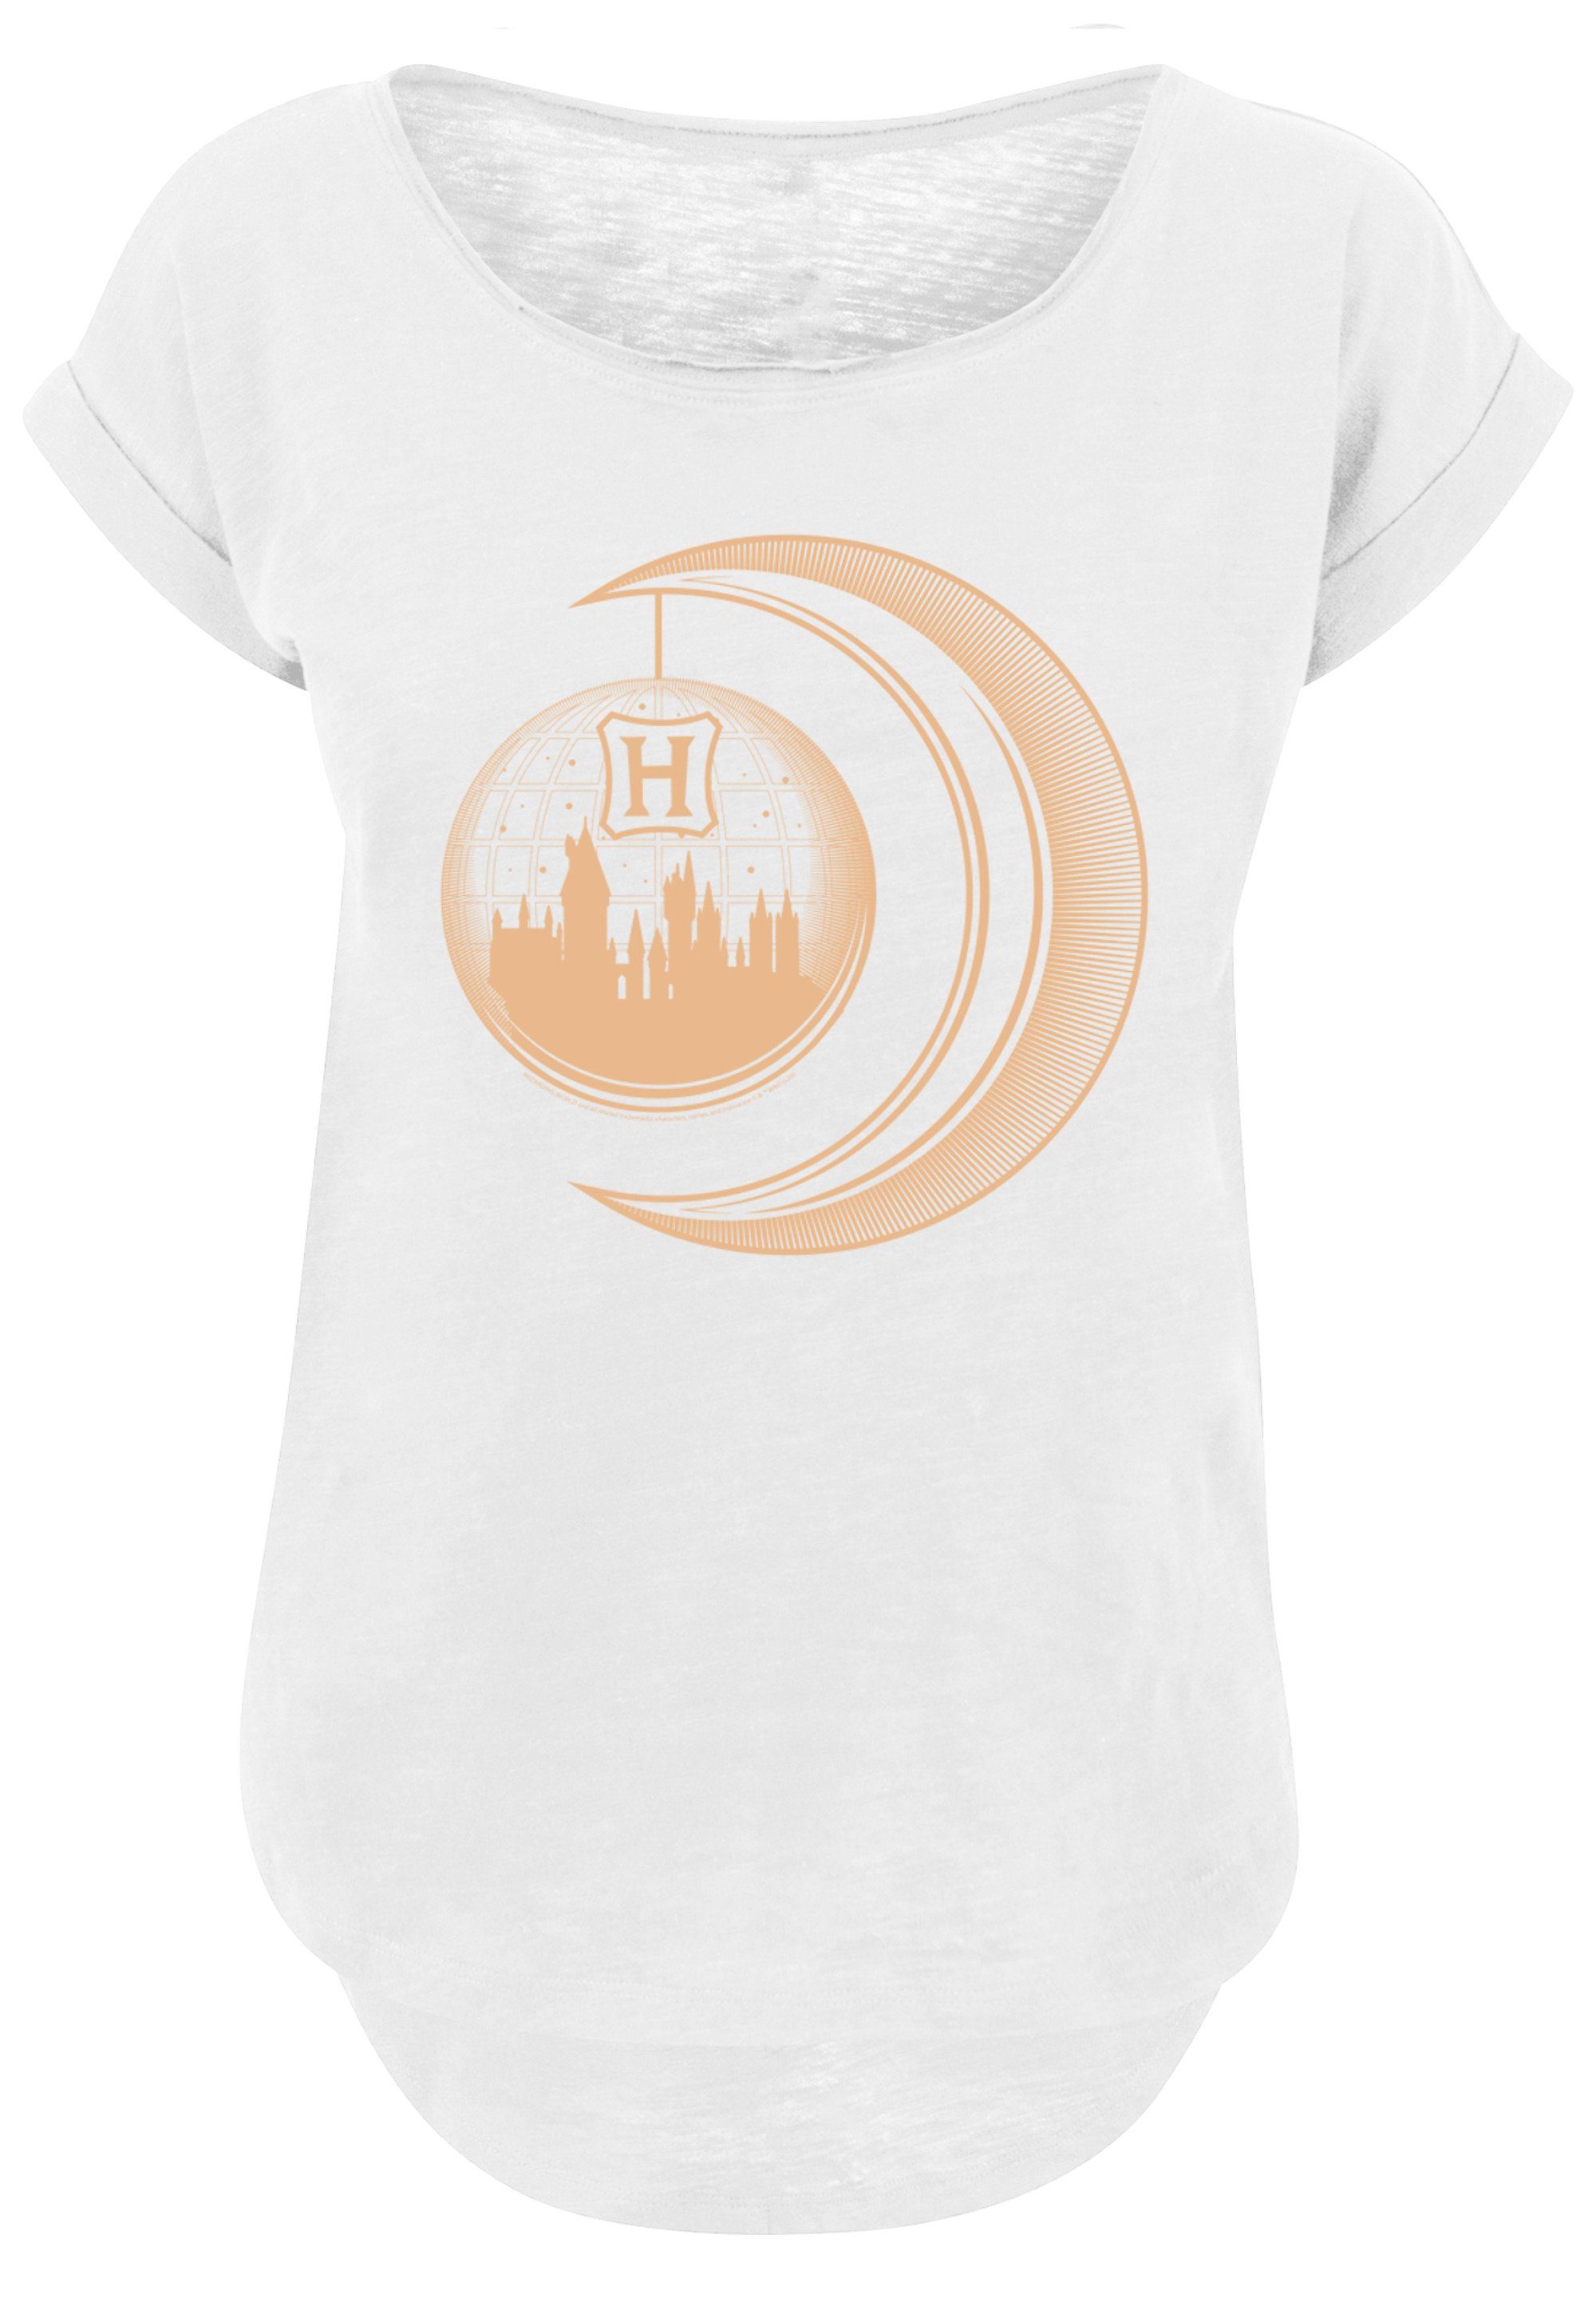 F4NT4STIC T-Shirt weiß Print Hogwarts Harry Potter Moon